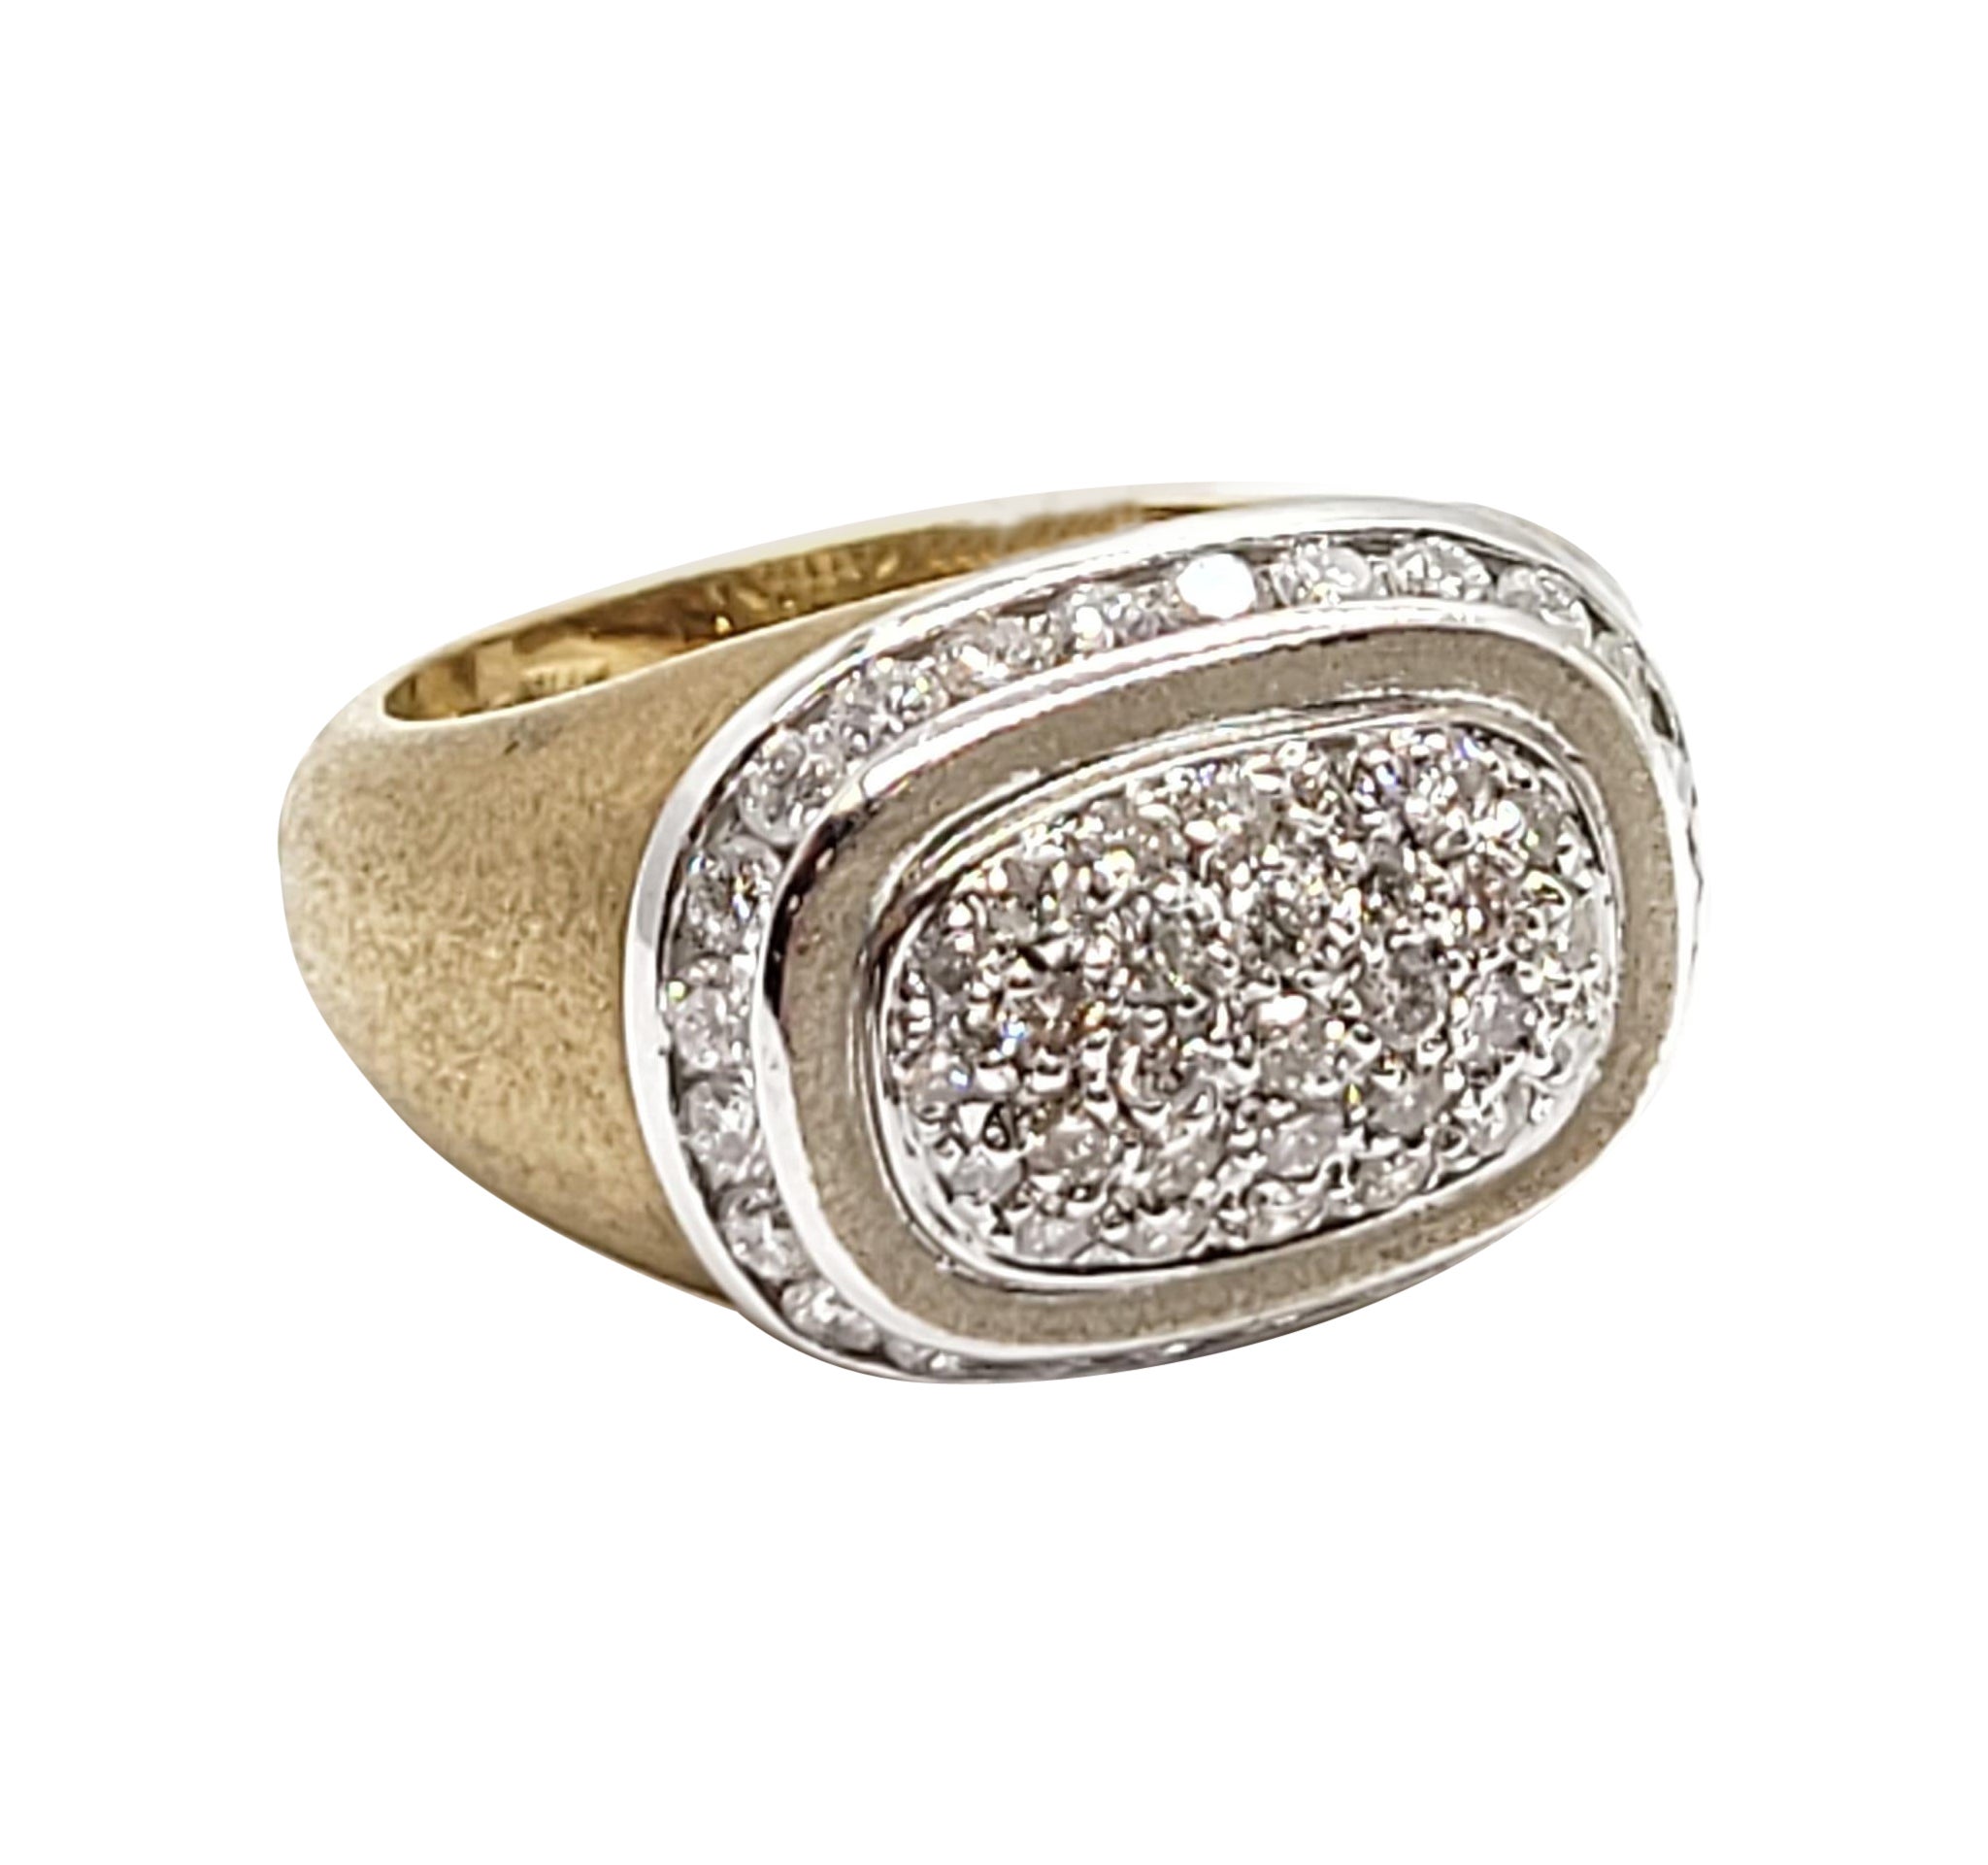 Andreoli 0.82 Carat Diamond 18 Karat Gold Ring For Sale